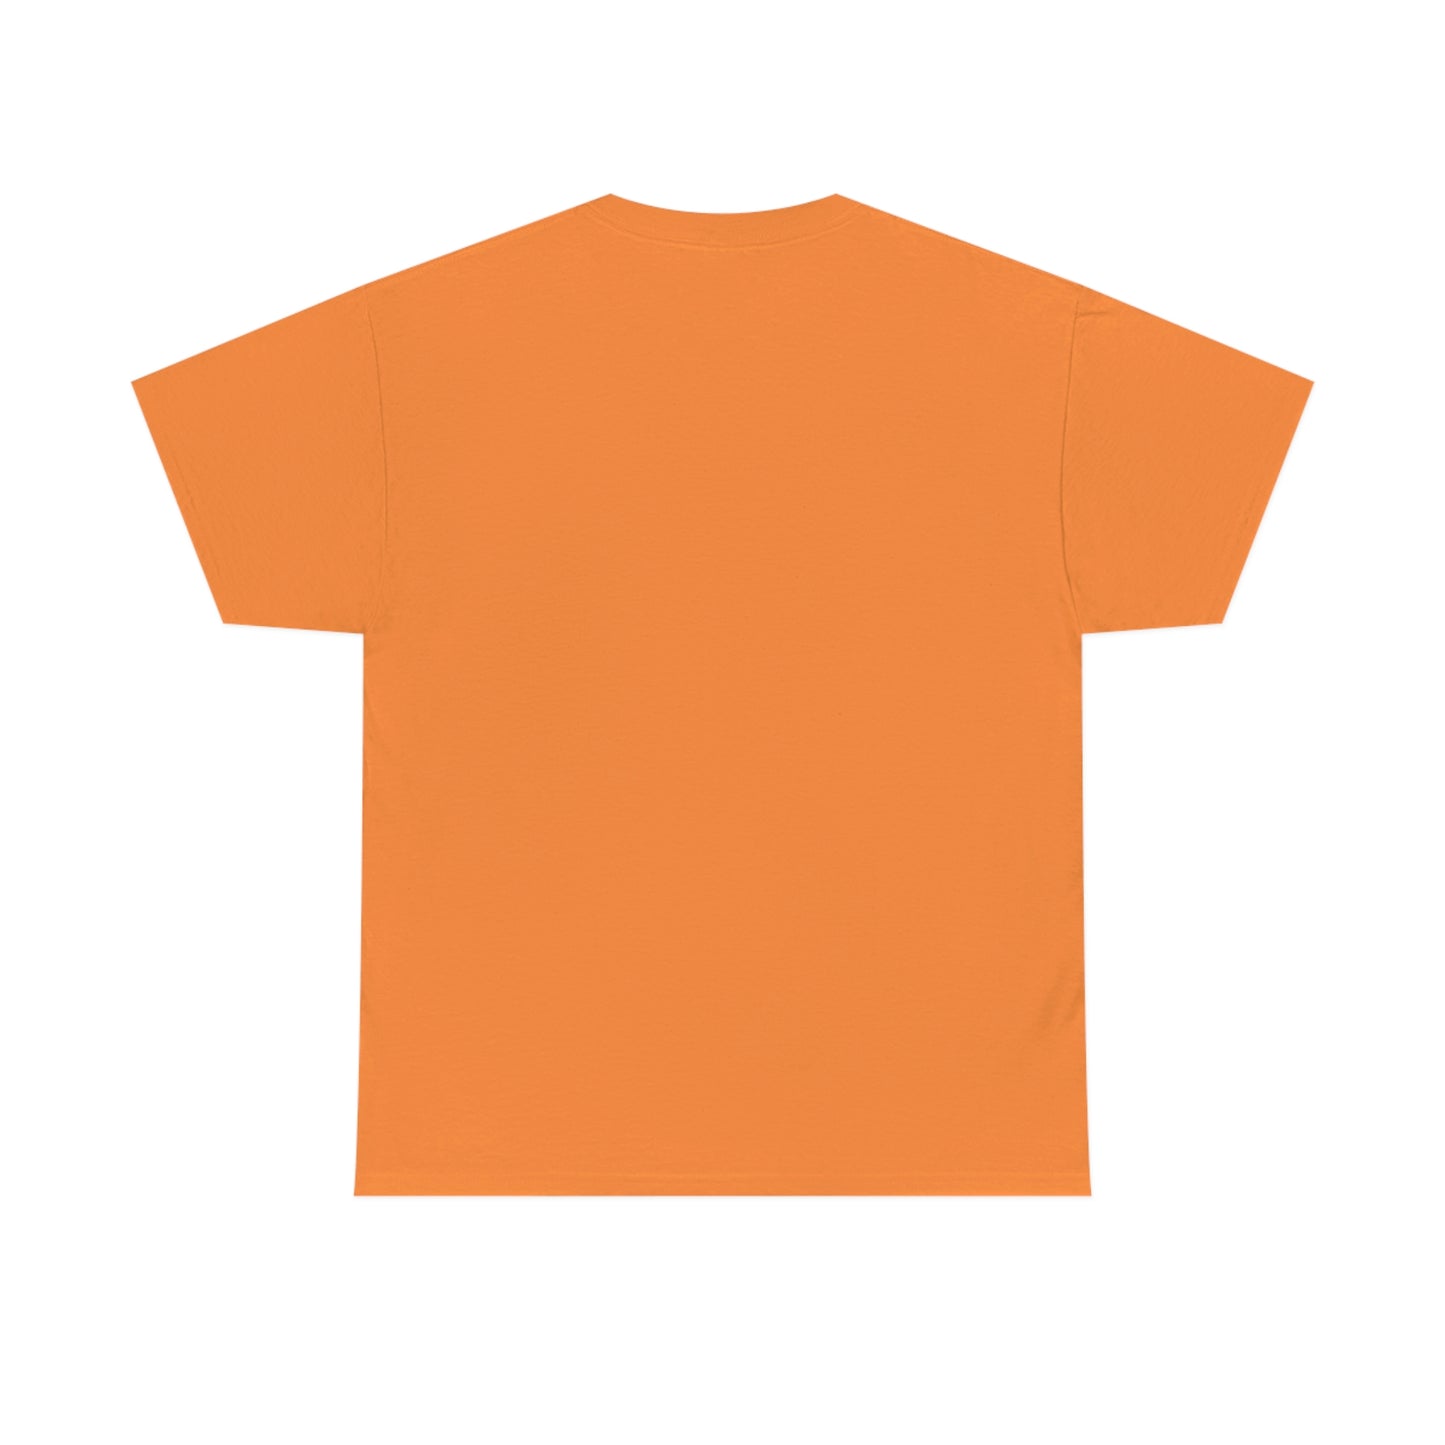 Every Child Matters Indigenous T-Shirt Native American Hummingbird and Flower Orange Shirt Day